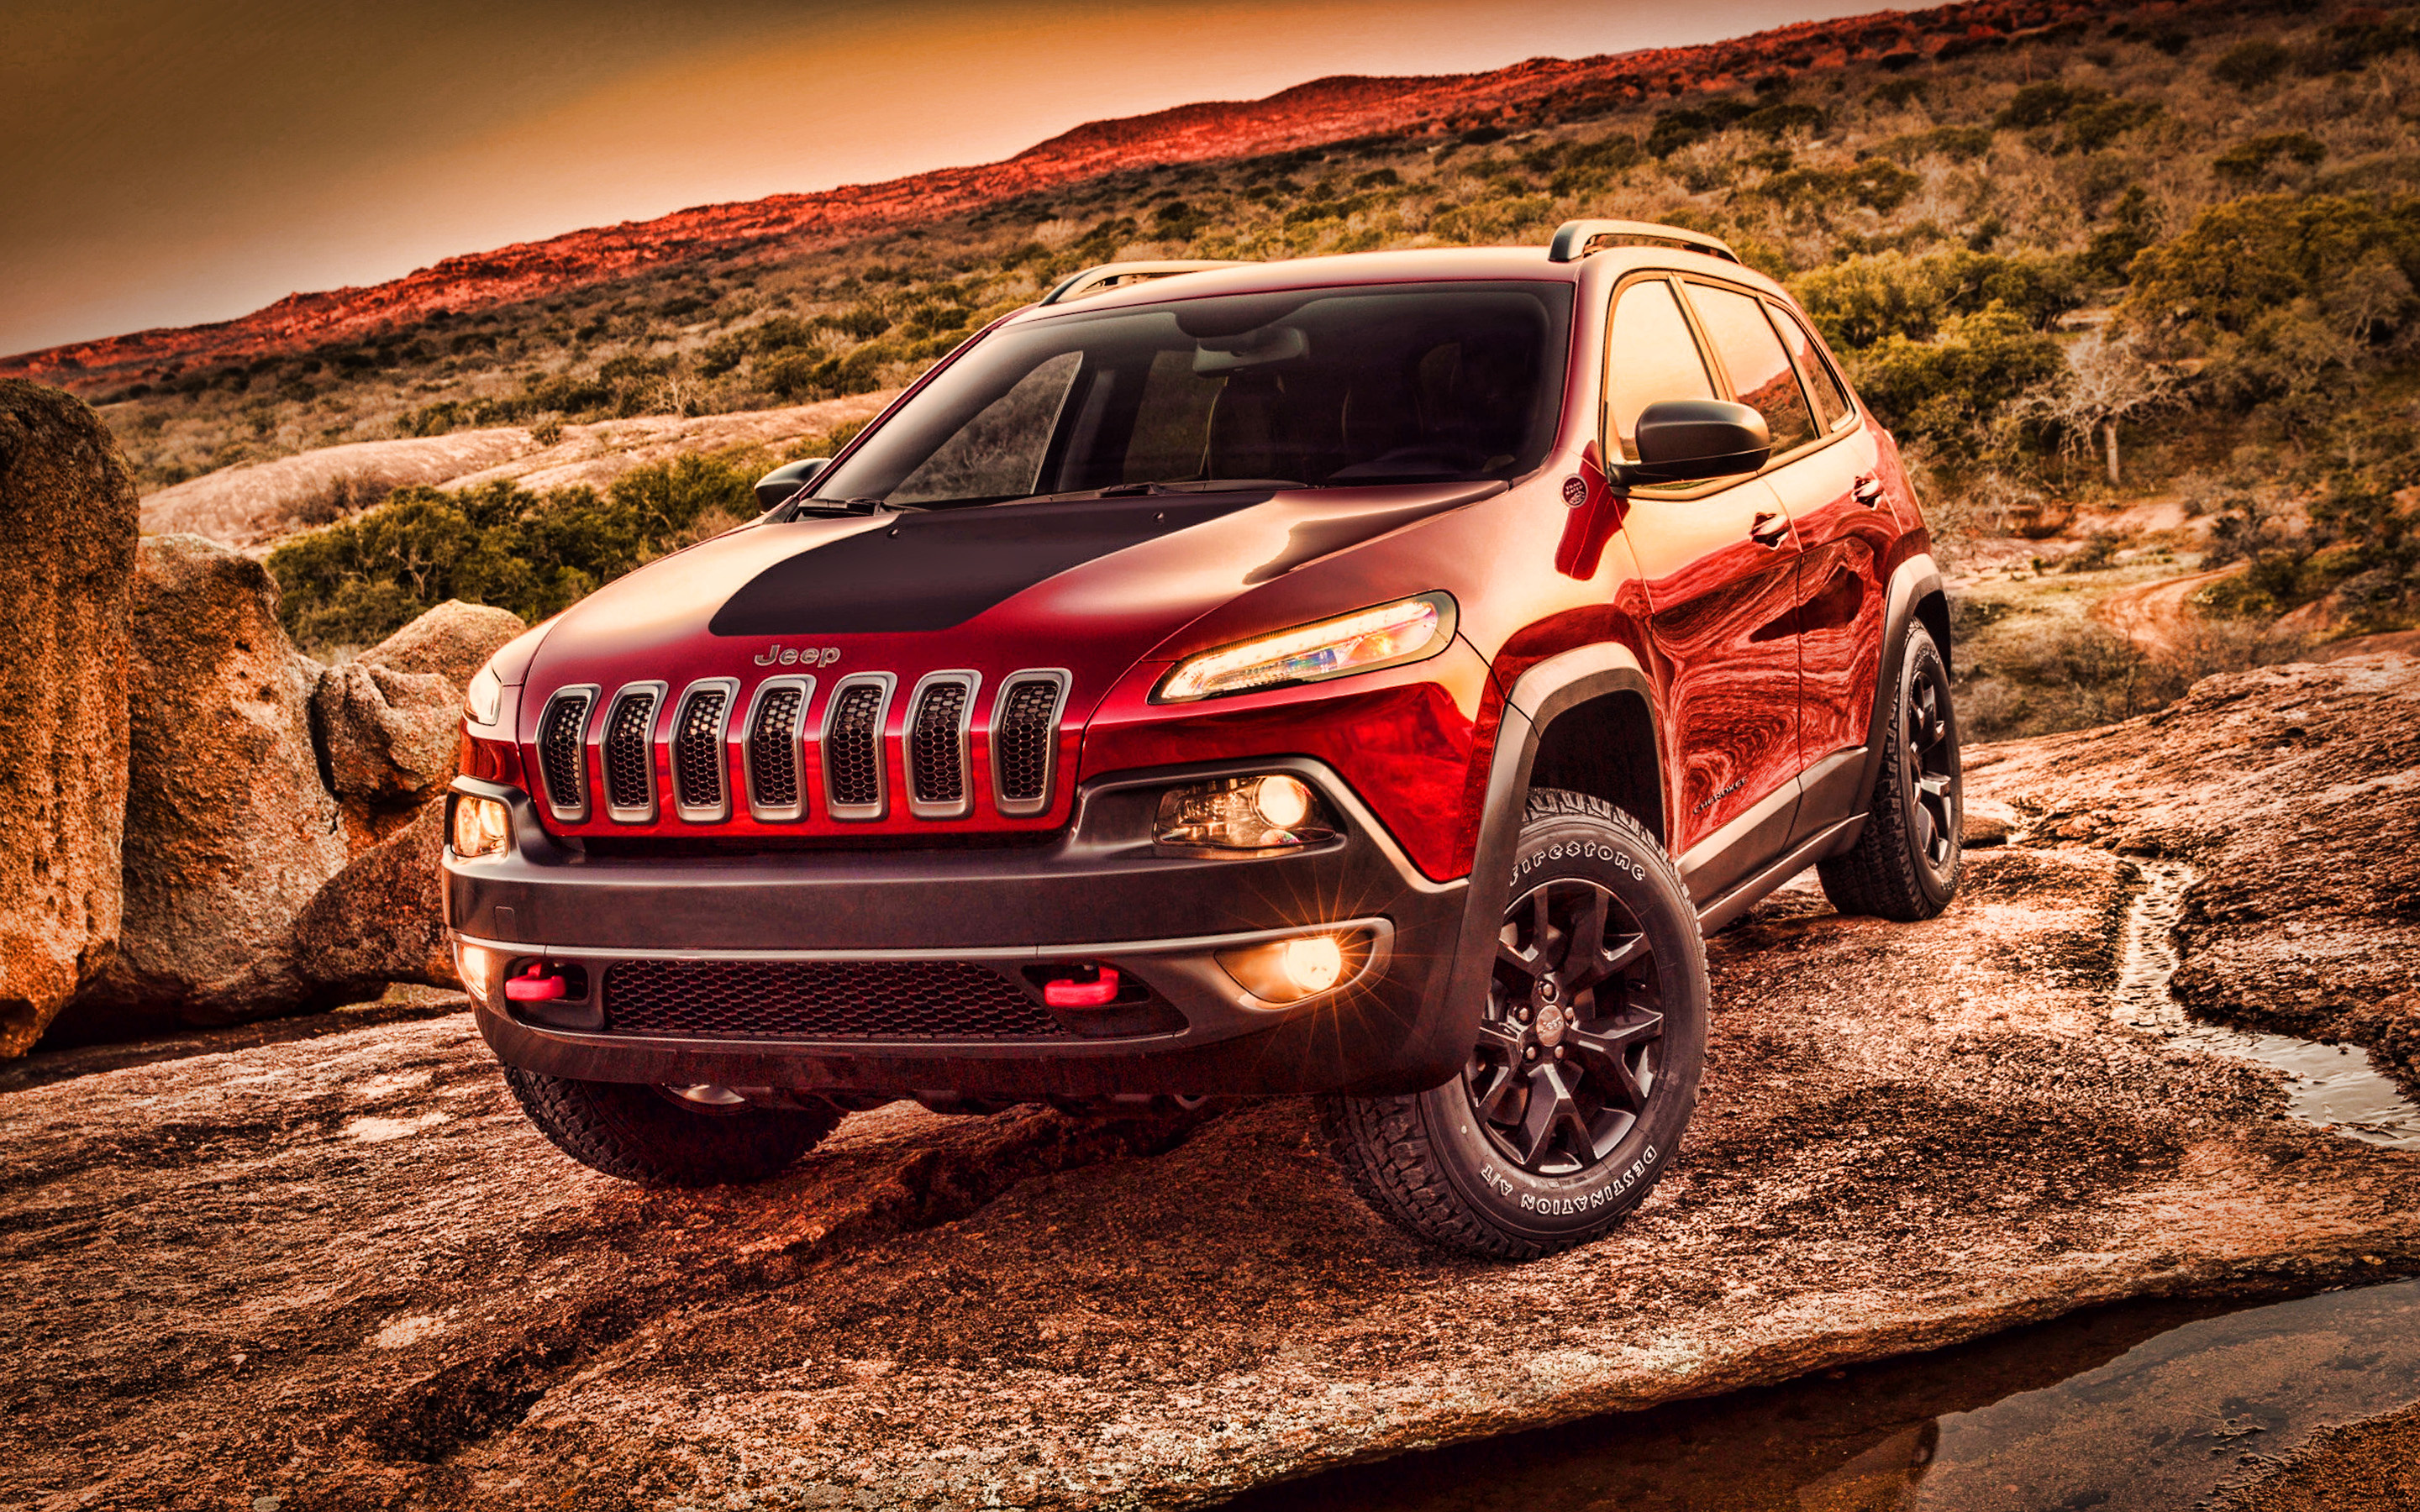 Jeep Cherokee, Offroad adventure, Desert SUV, High-quality wallpapers, 2880x1800 HD Desktop